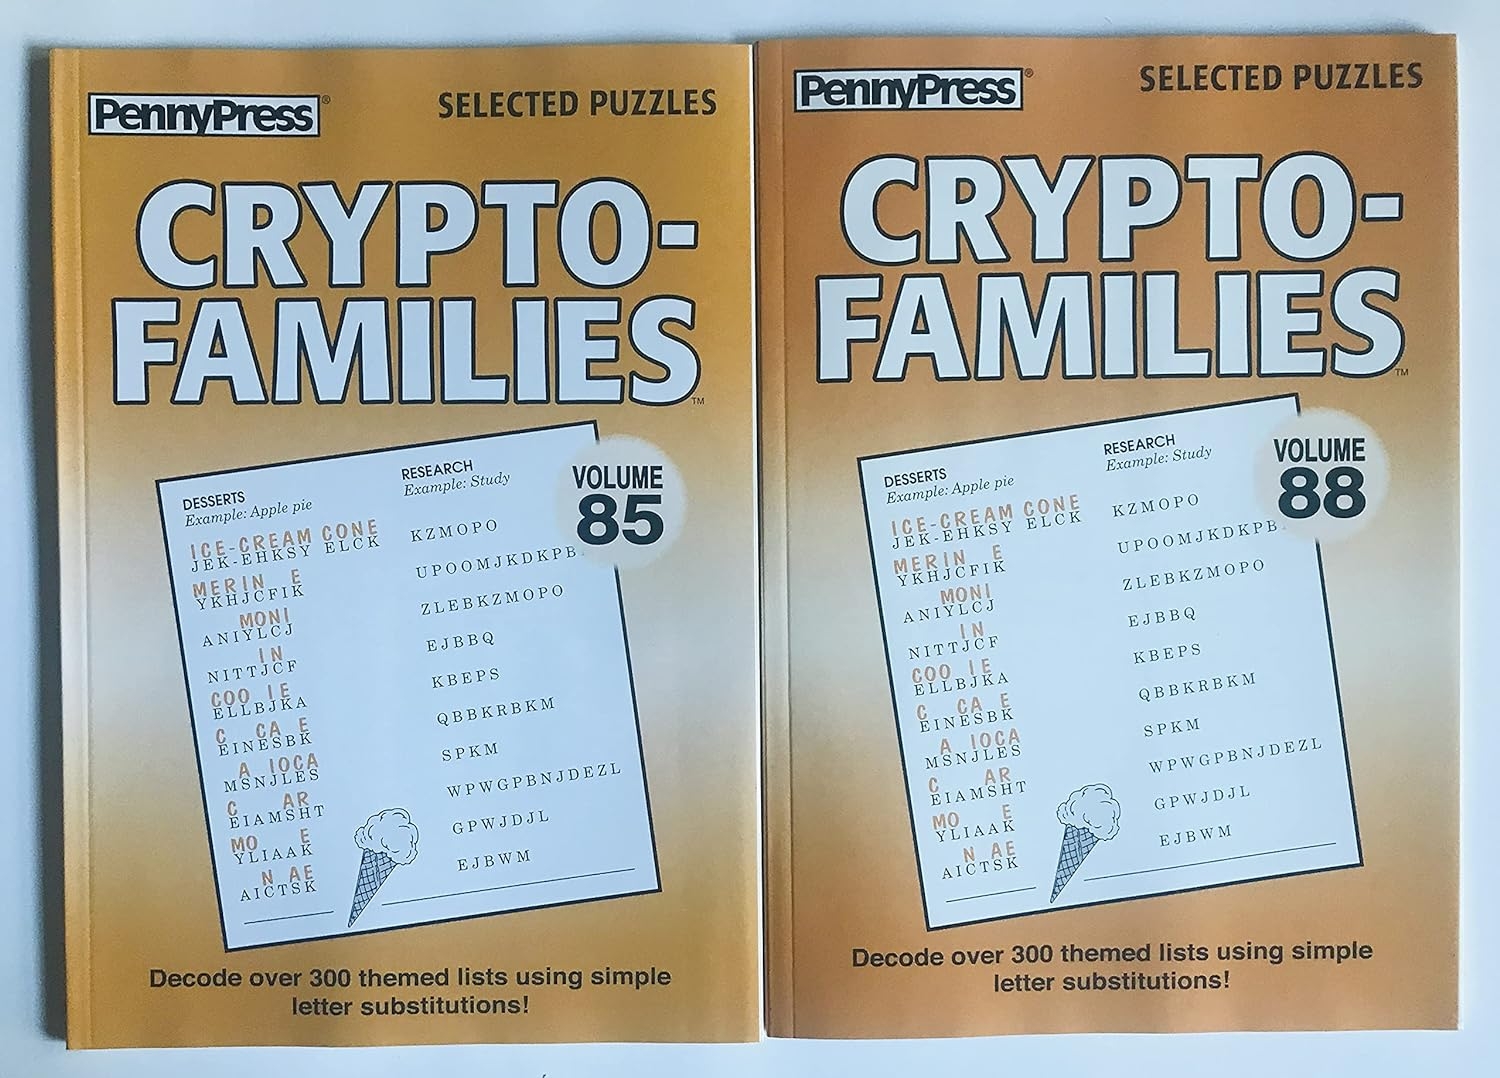 Printable Crypto Families Puzzles